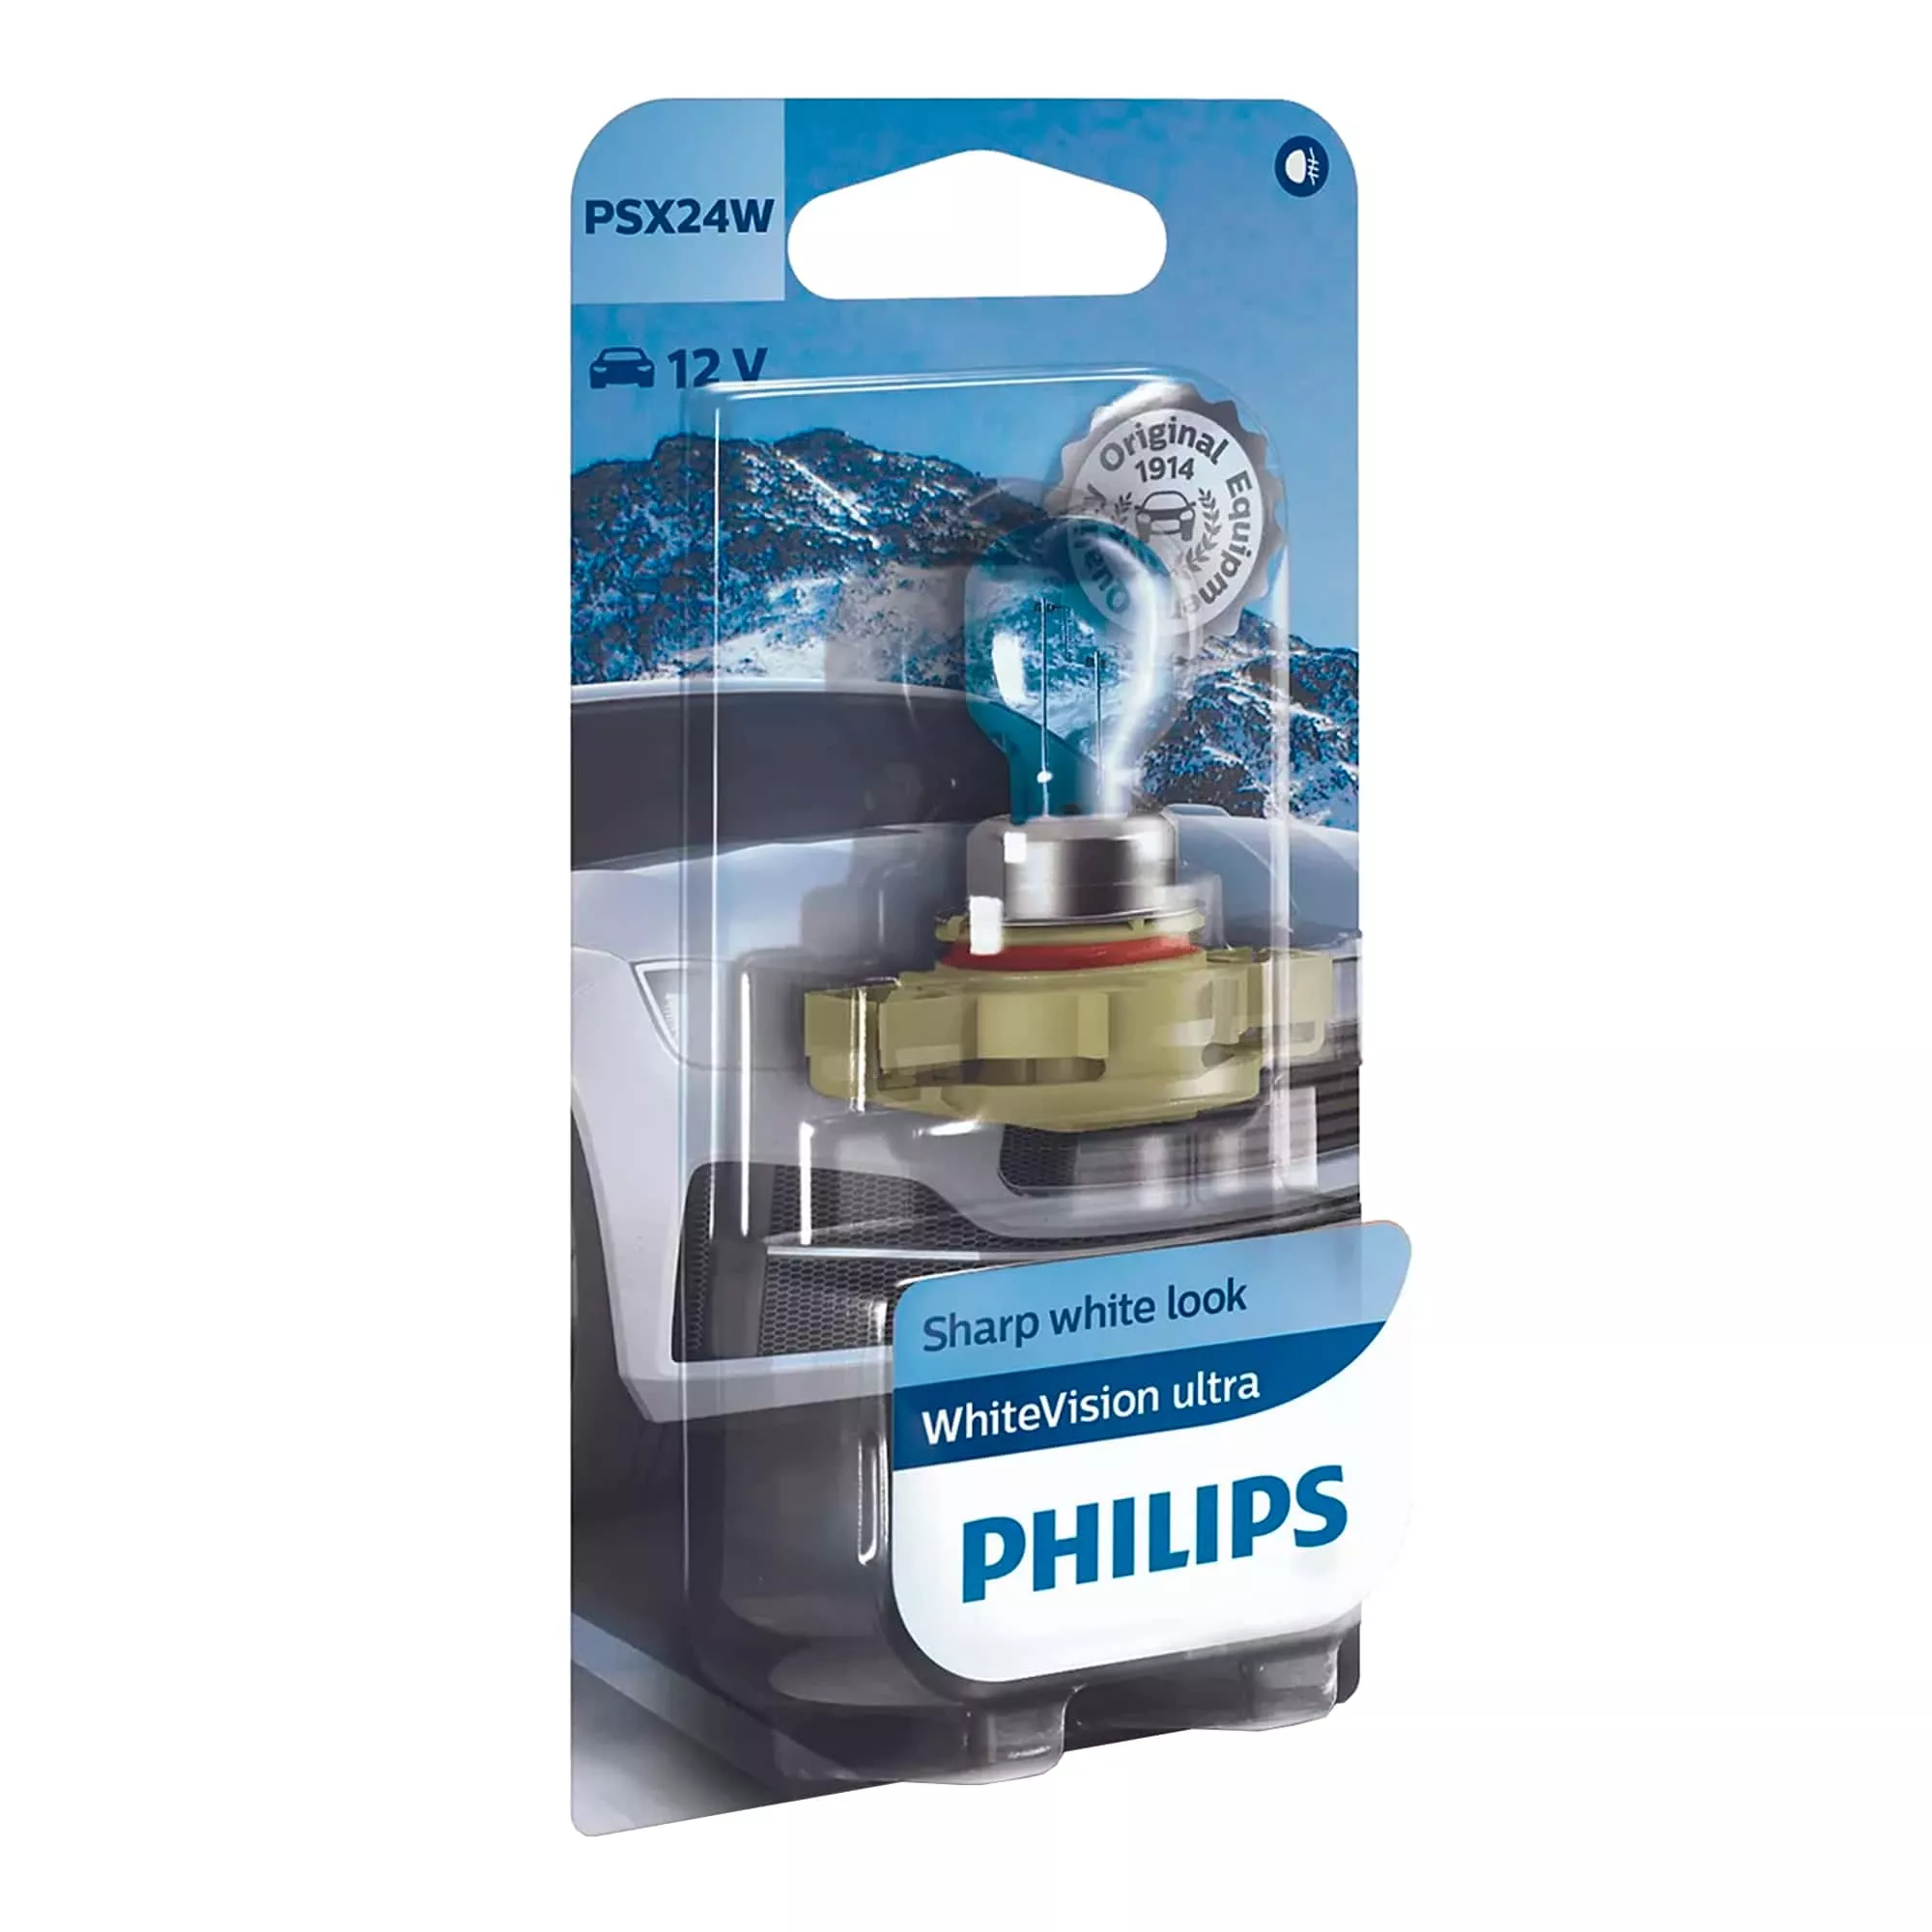 Лампа Philips WhiteVision Ultra PSX24W 12V 24W 12276WVUB1